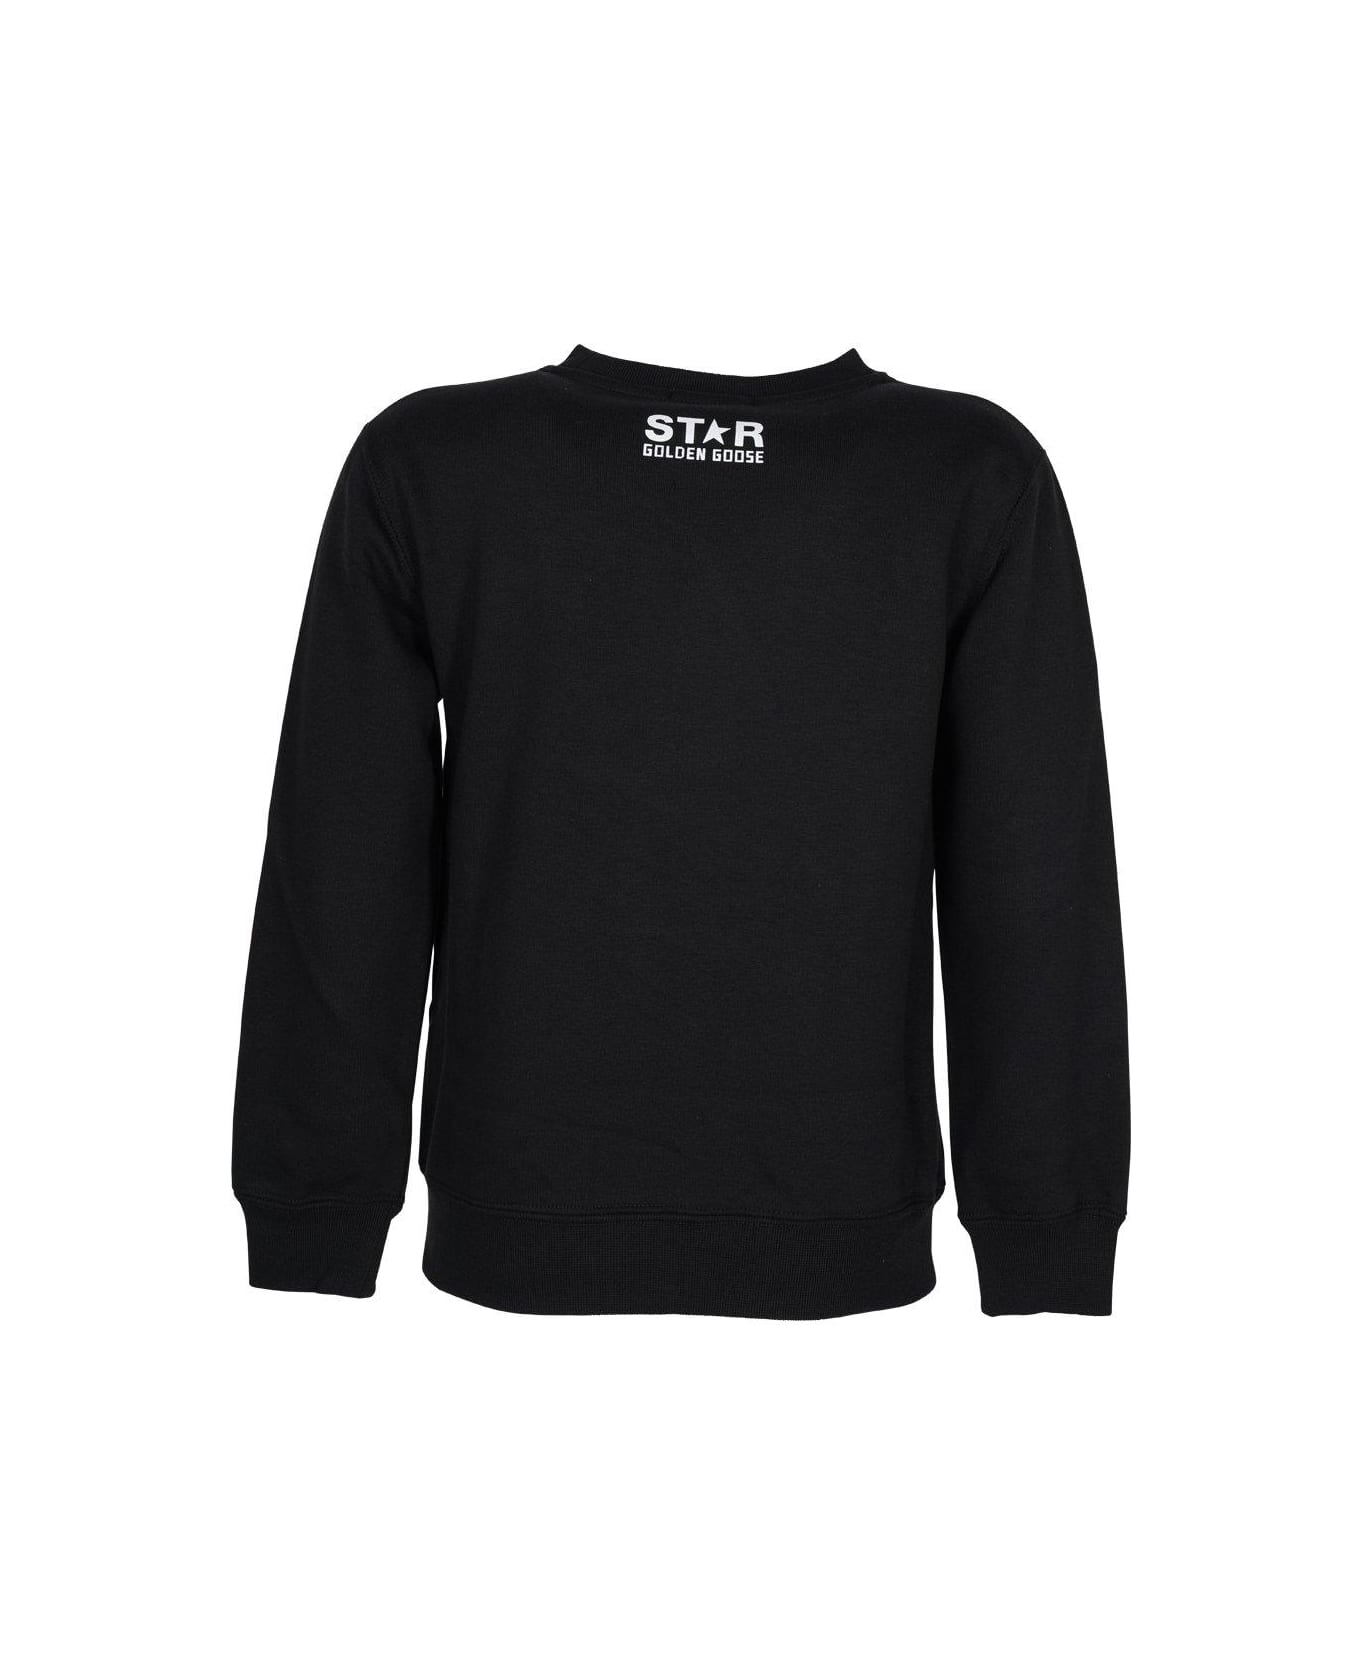 Golden Goose Black Star Collection Long-sleeved Sweatshirt - Black/white